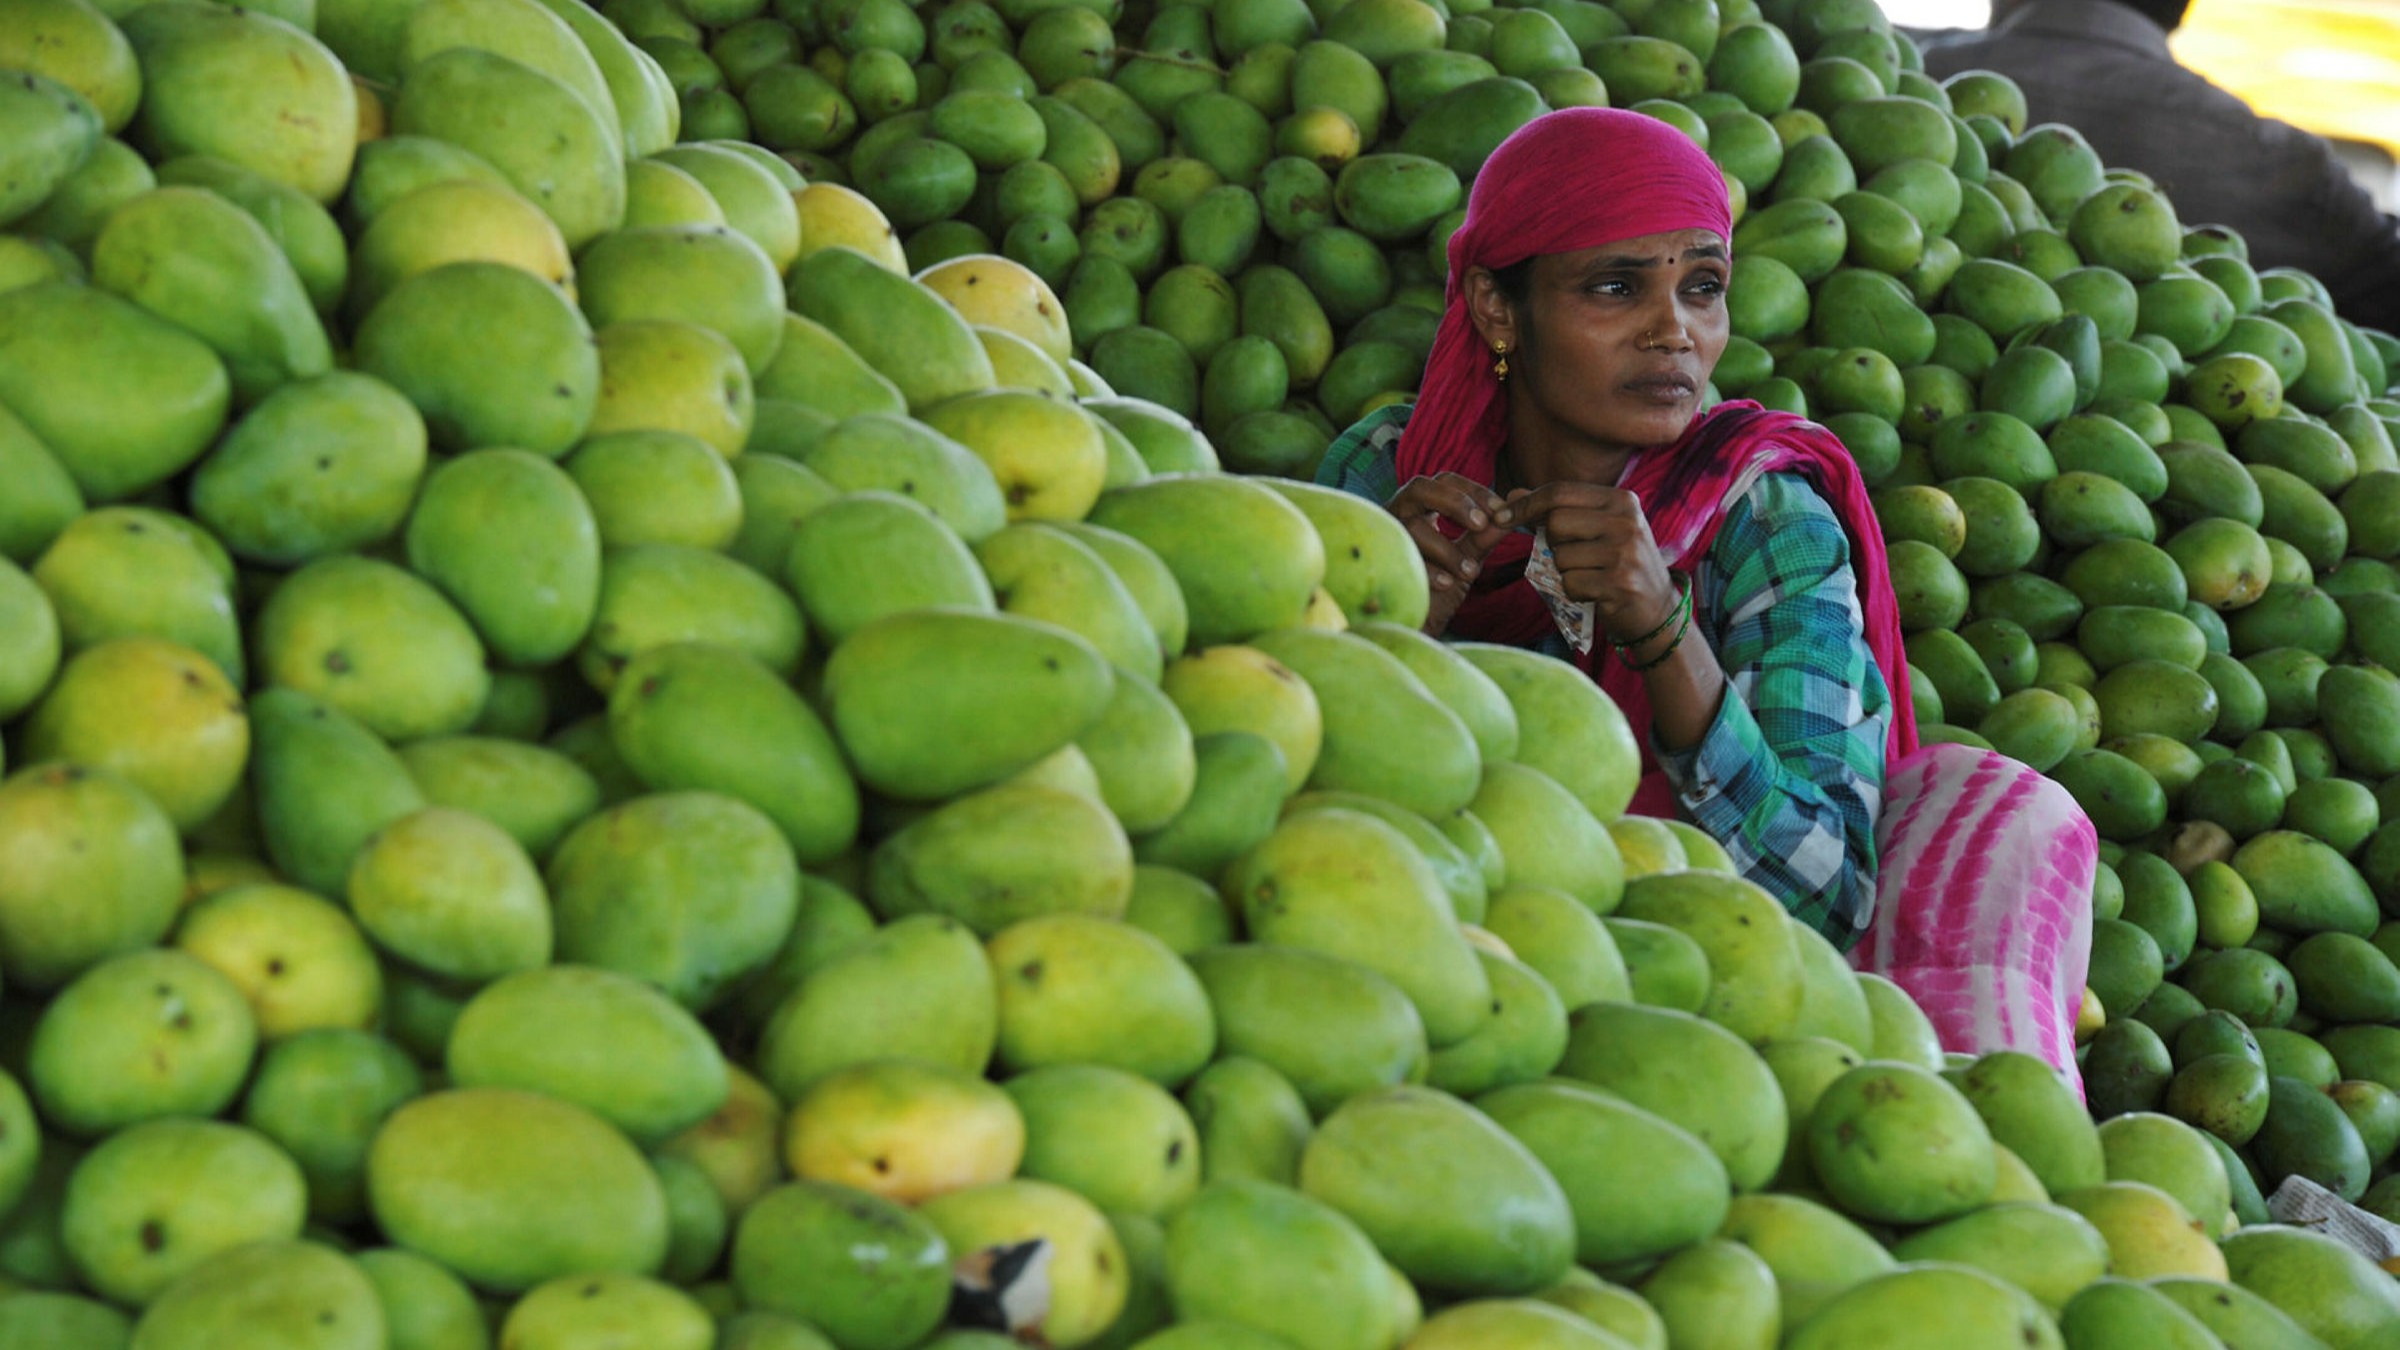 Gujarat mangoes